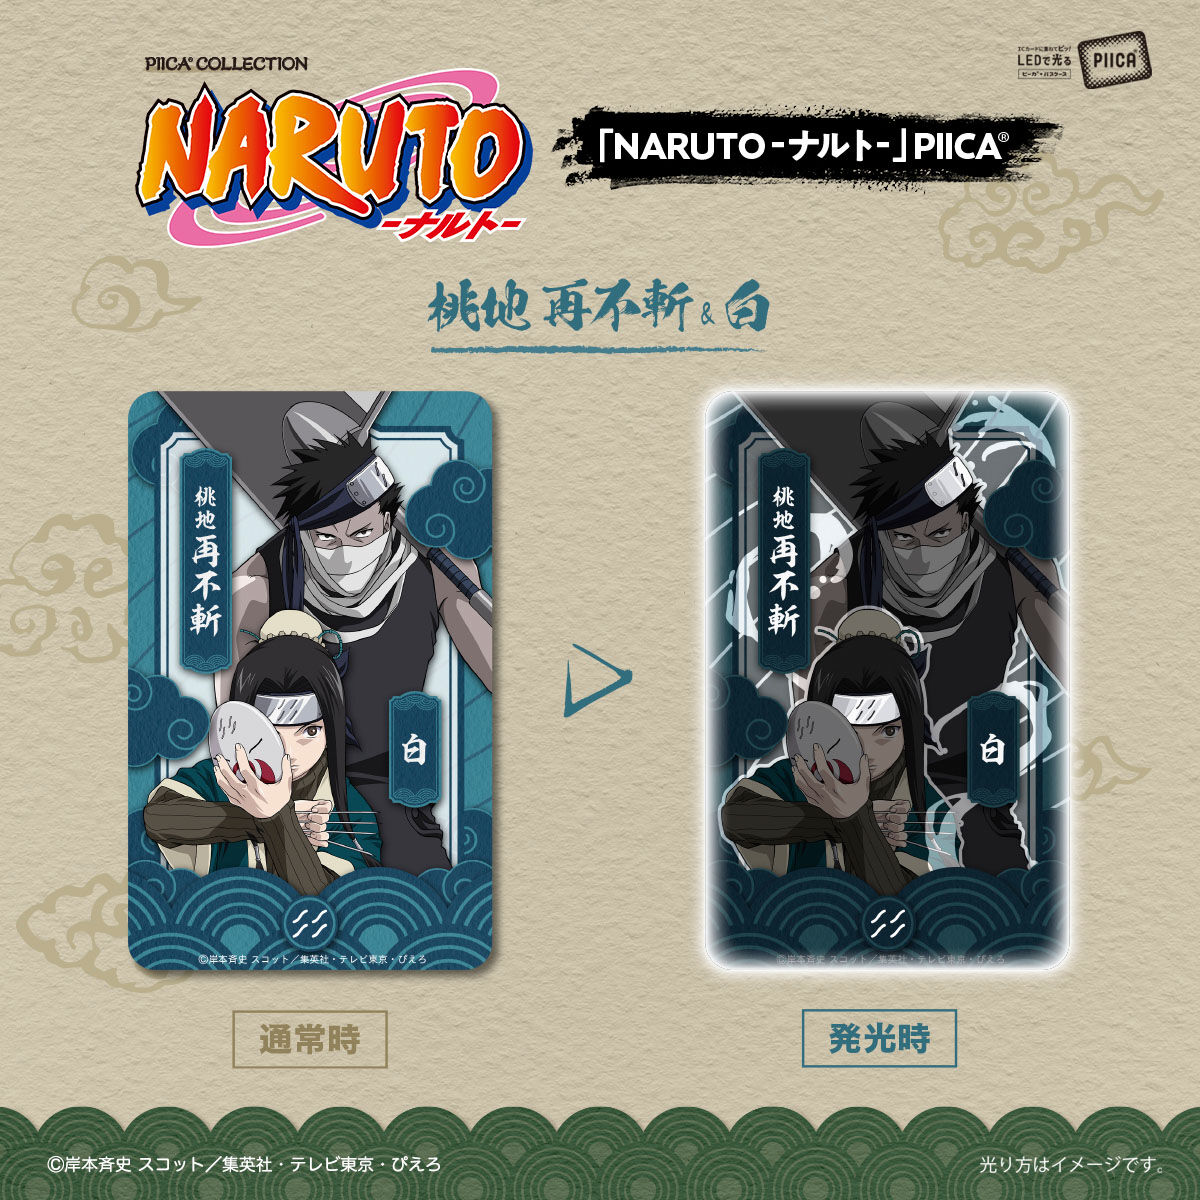 NARUTO PIICA＋クリアパスケース | NARUTO -ナルト- ファッション 